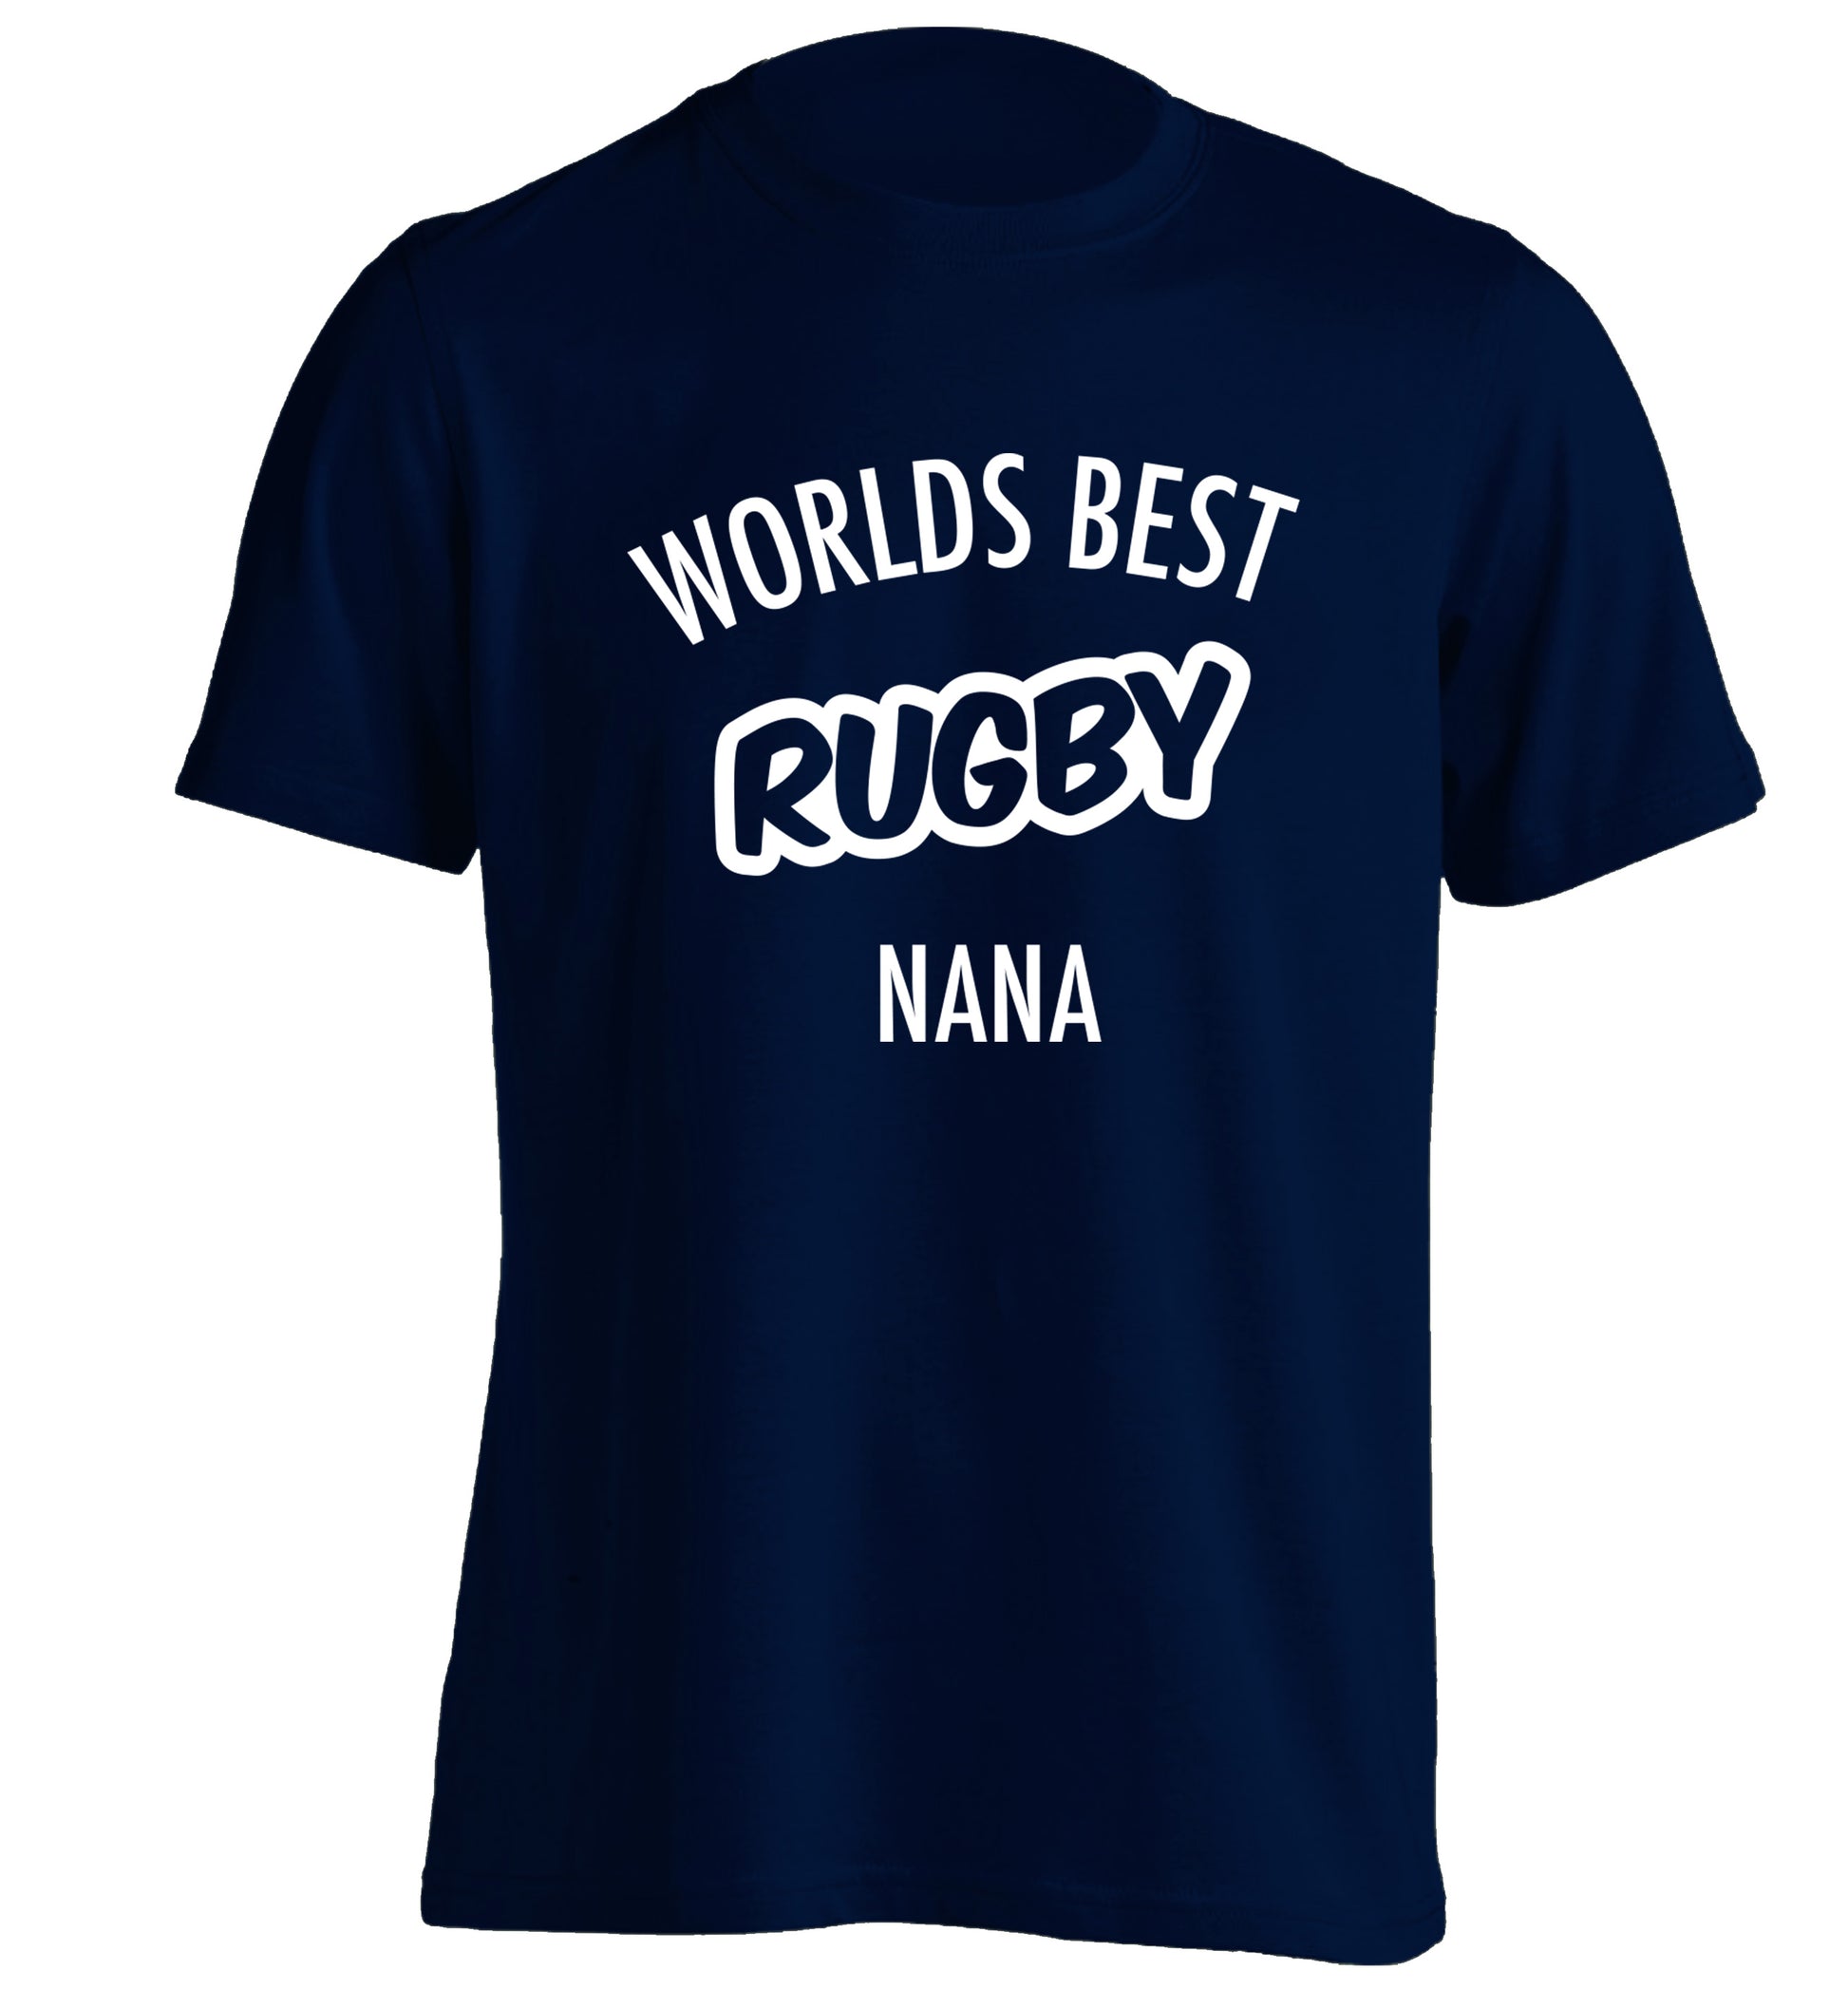 Worlds Best Rugby Grandma adults unisex navy Tshirt 2XL